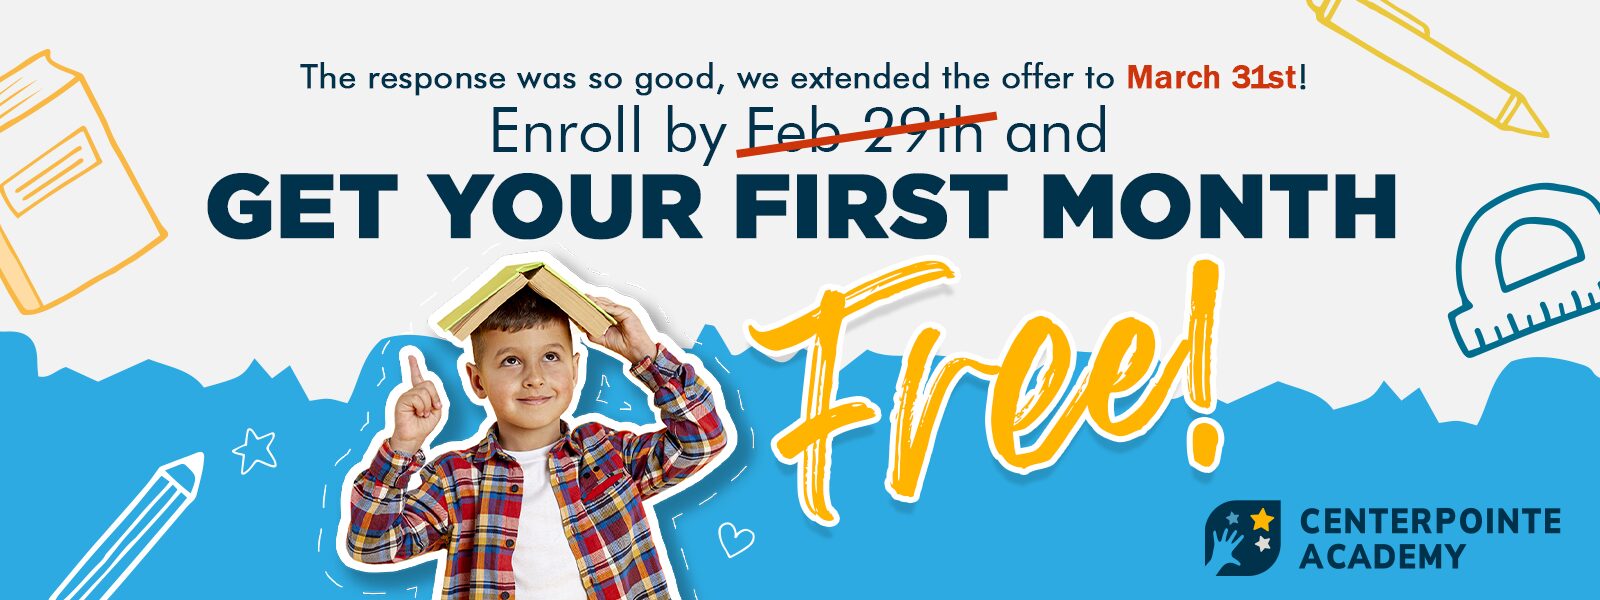 Enroll-by-Feb-29th_1600-x-600 (2)